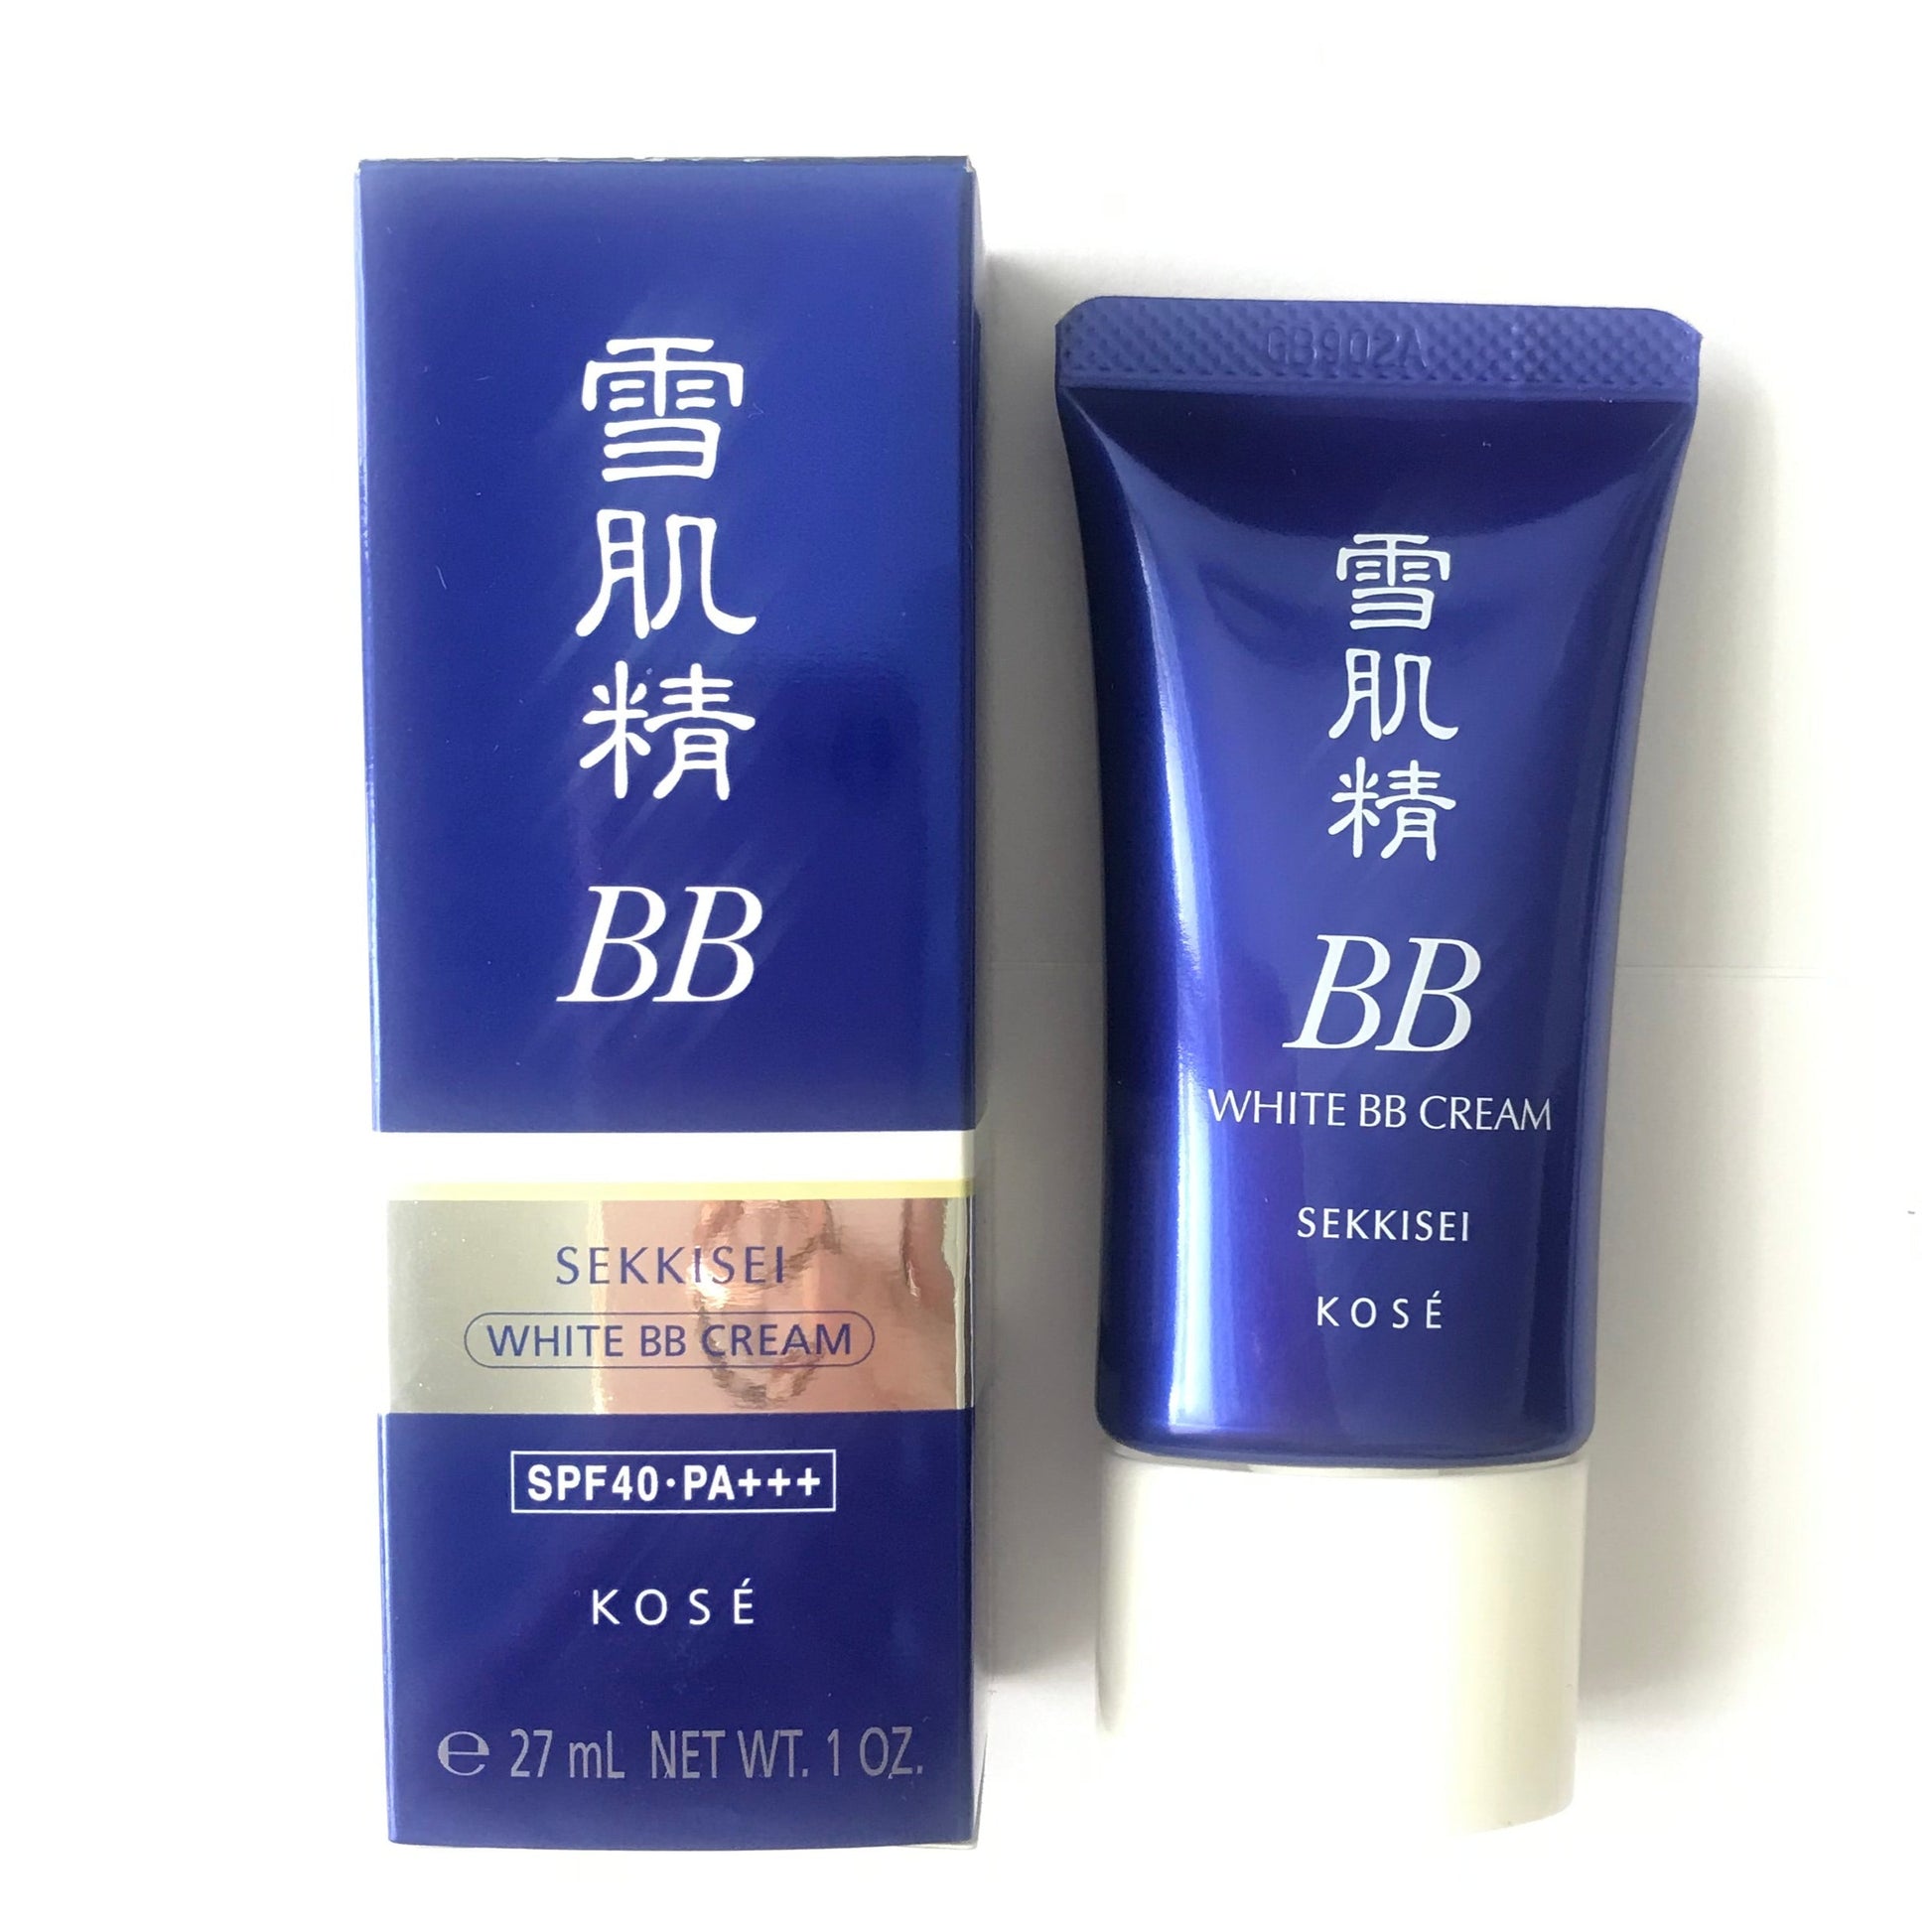 Kose Sekkisei White BB Cream SPF40 PA+++, regular formula for oily and normal to oily skin